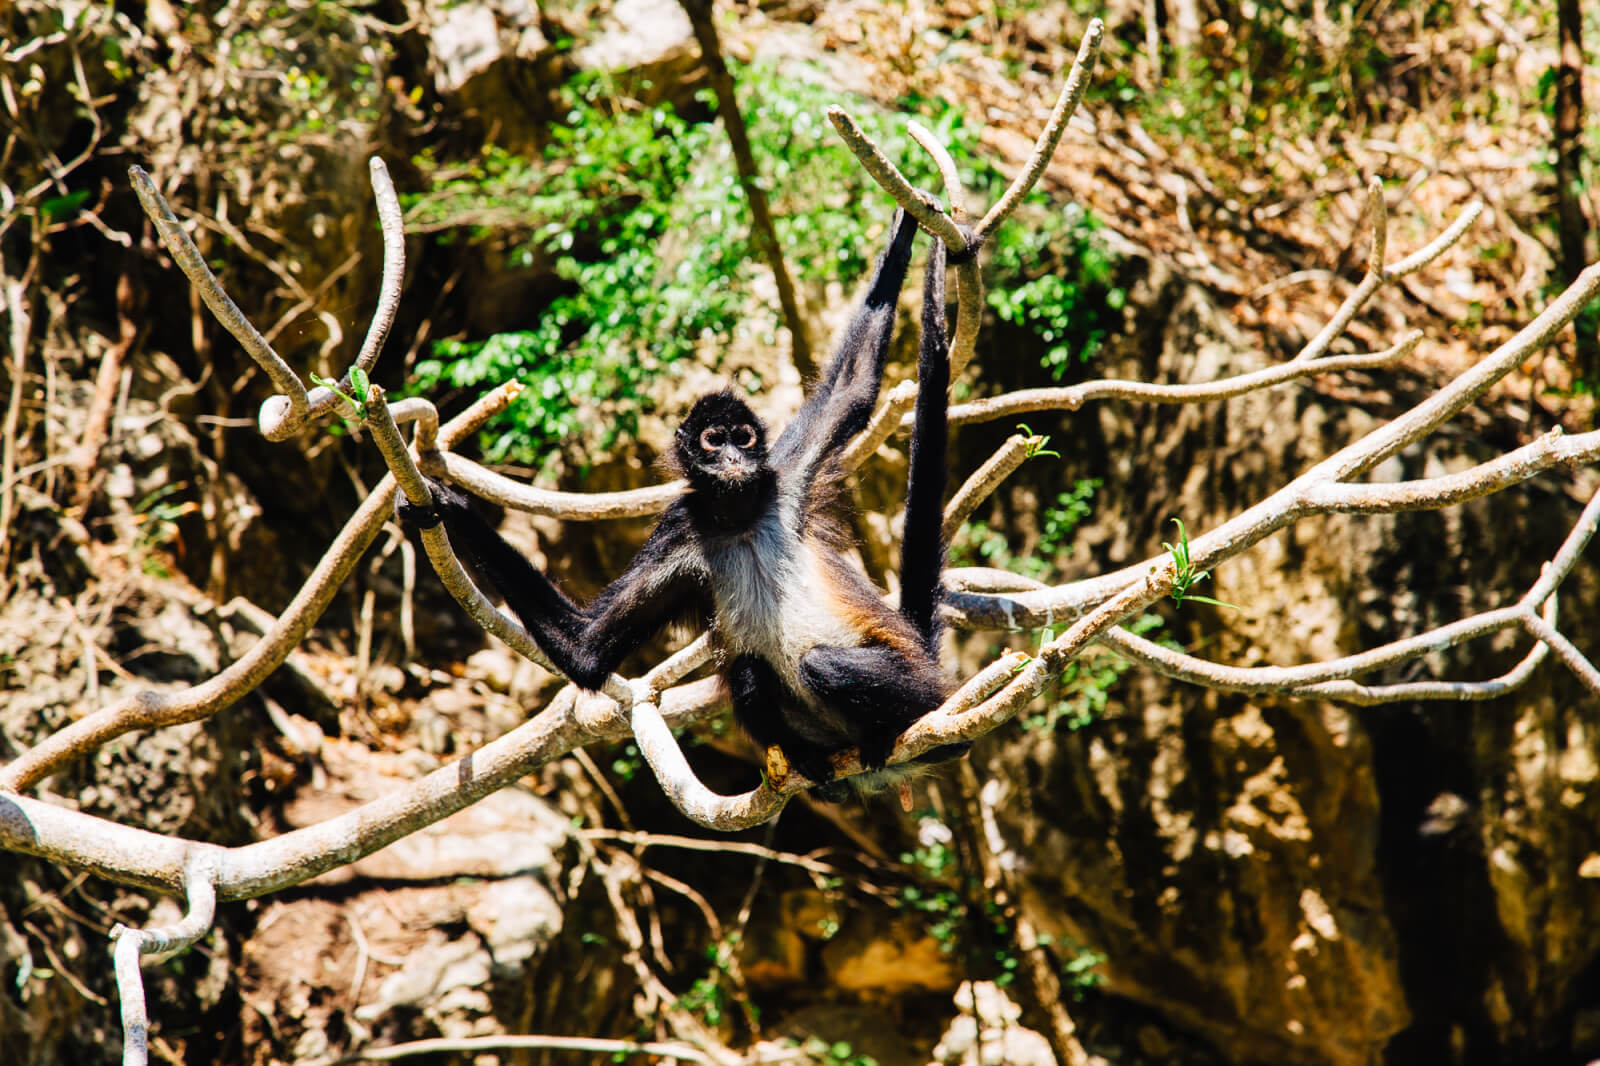 Monkey in Sumidero Canyon in Chiapas Mexico